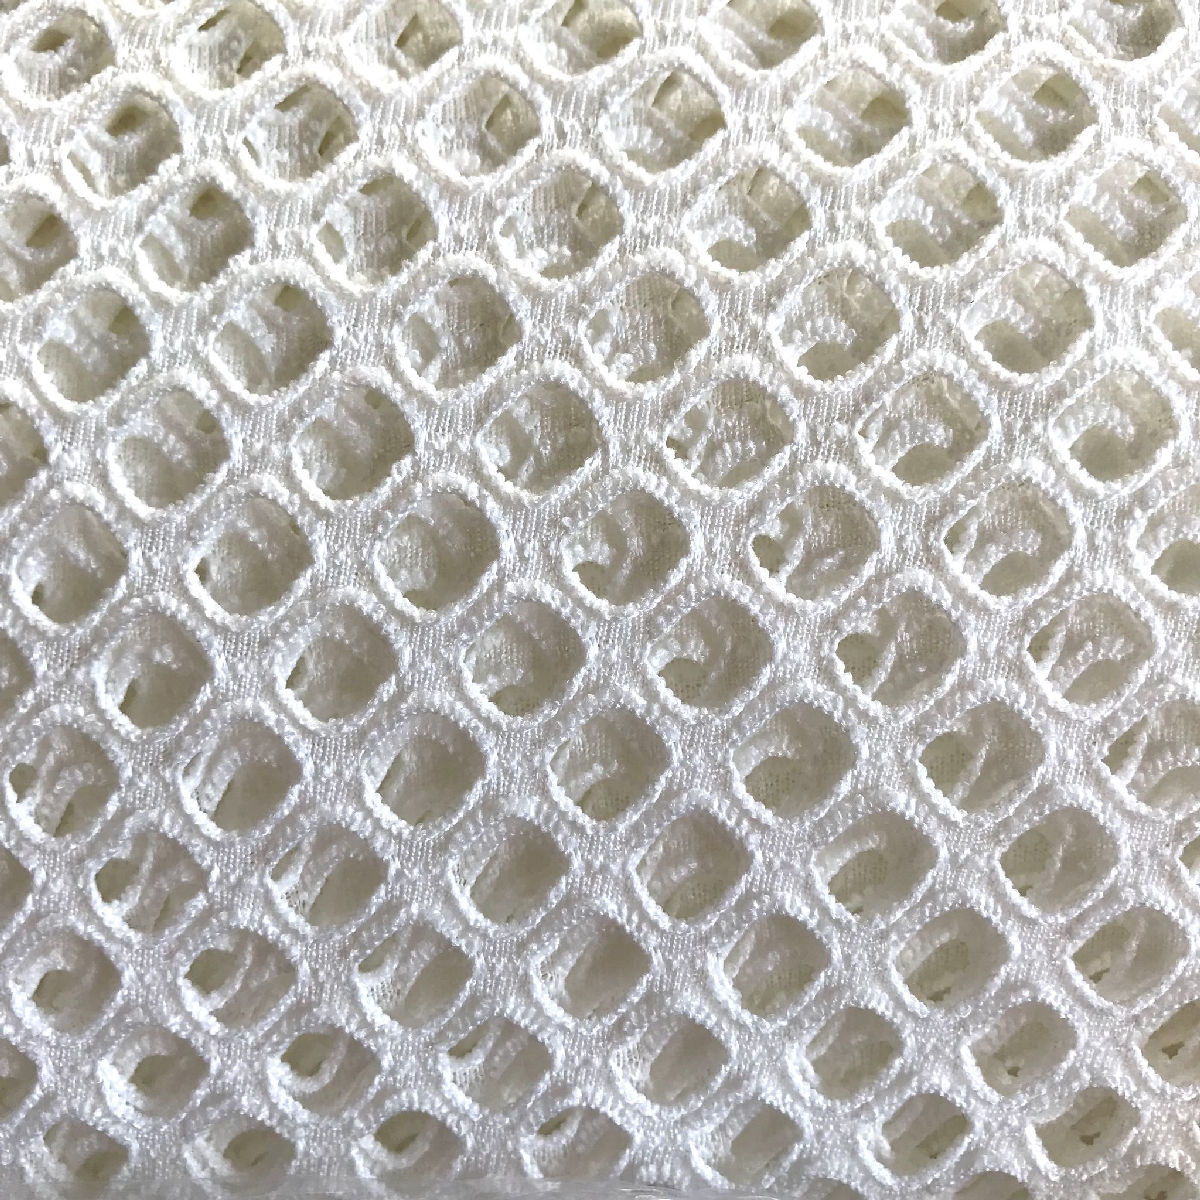 https://rapidsitecdn.com/BSTFabrics/Graphics/Std_Product_Images/off-white-diamond-fishnet-mesh-fabric-100-polyester-stretch-5mm-holes-150cm-wide-35768-p.jpg